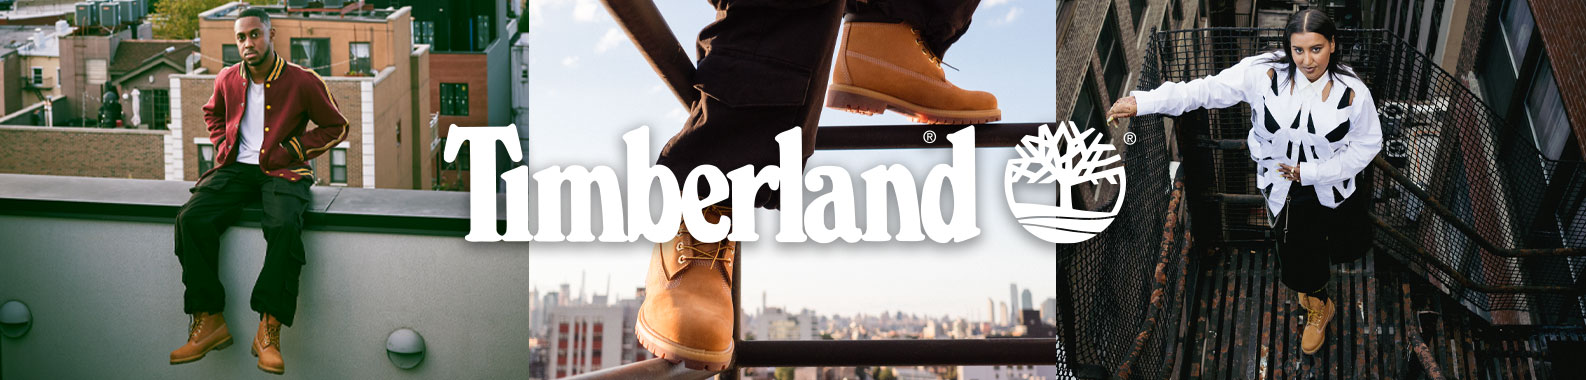 Timberland brand header image